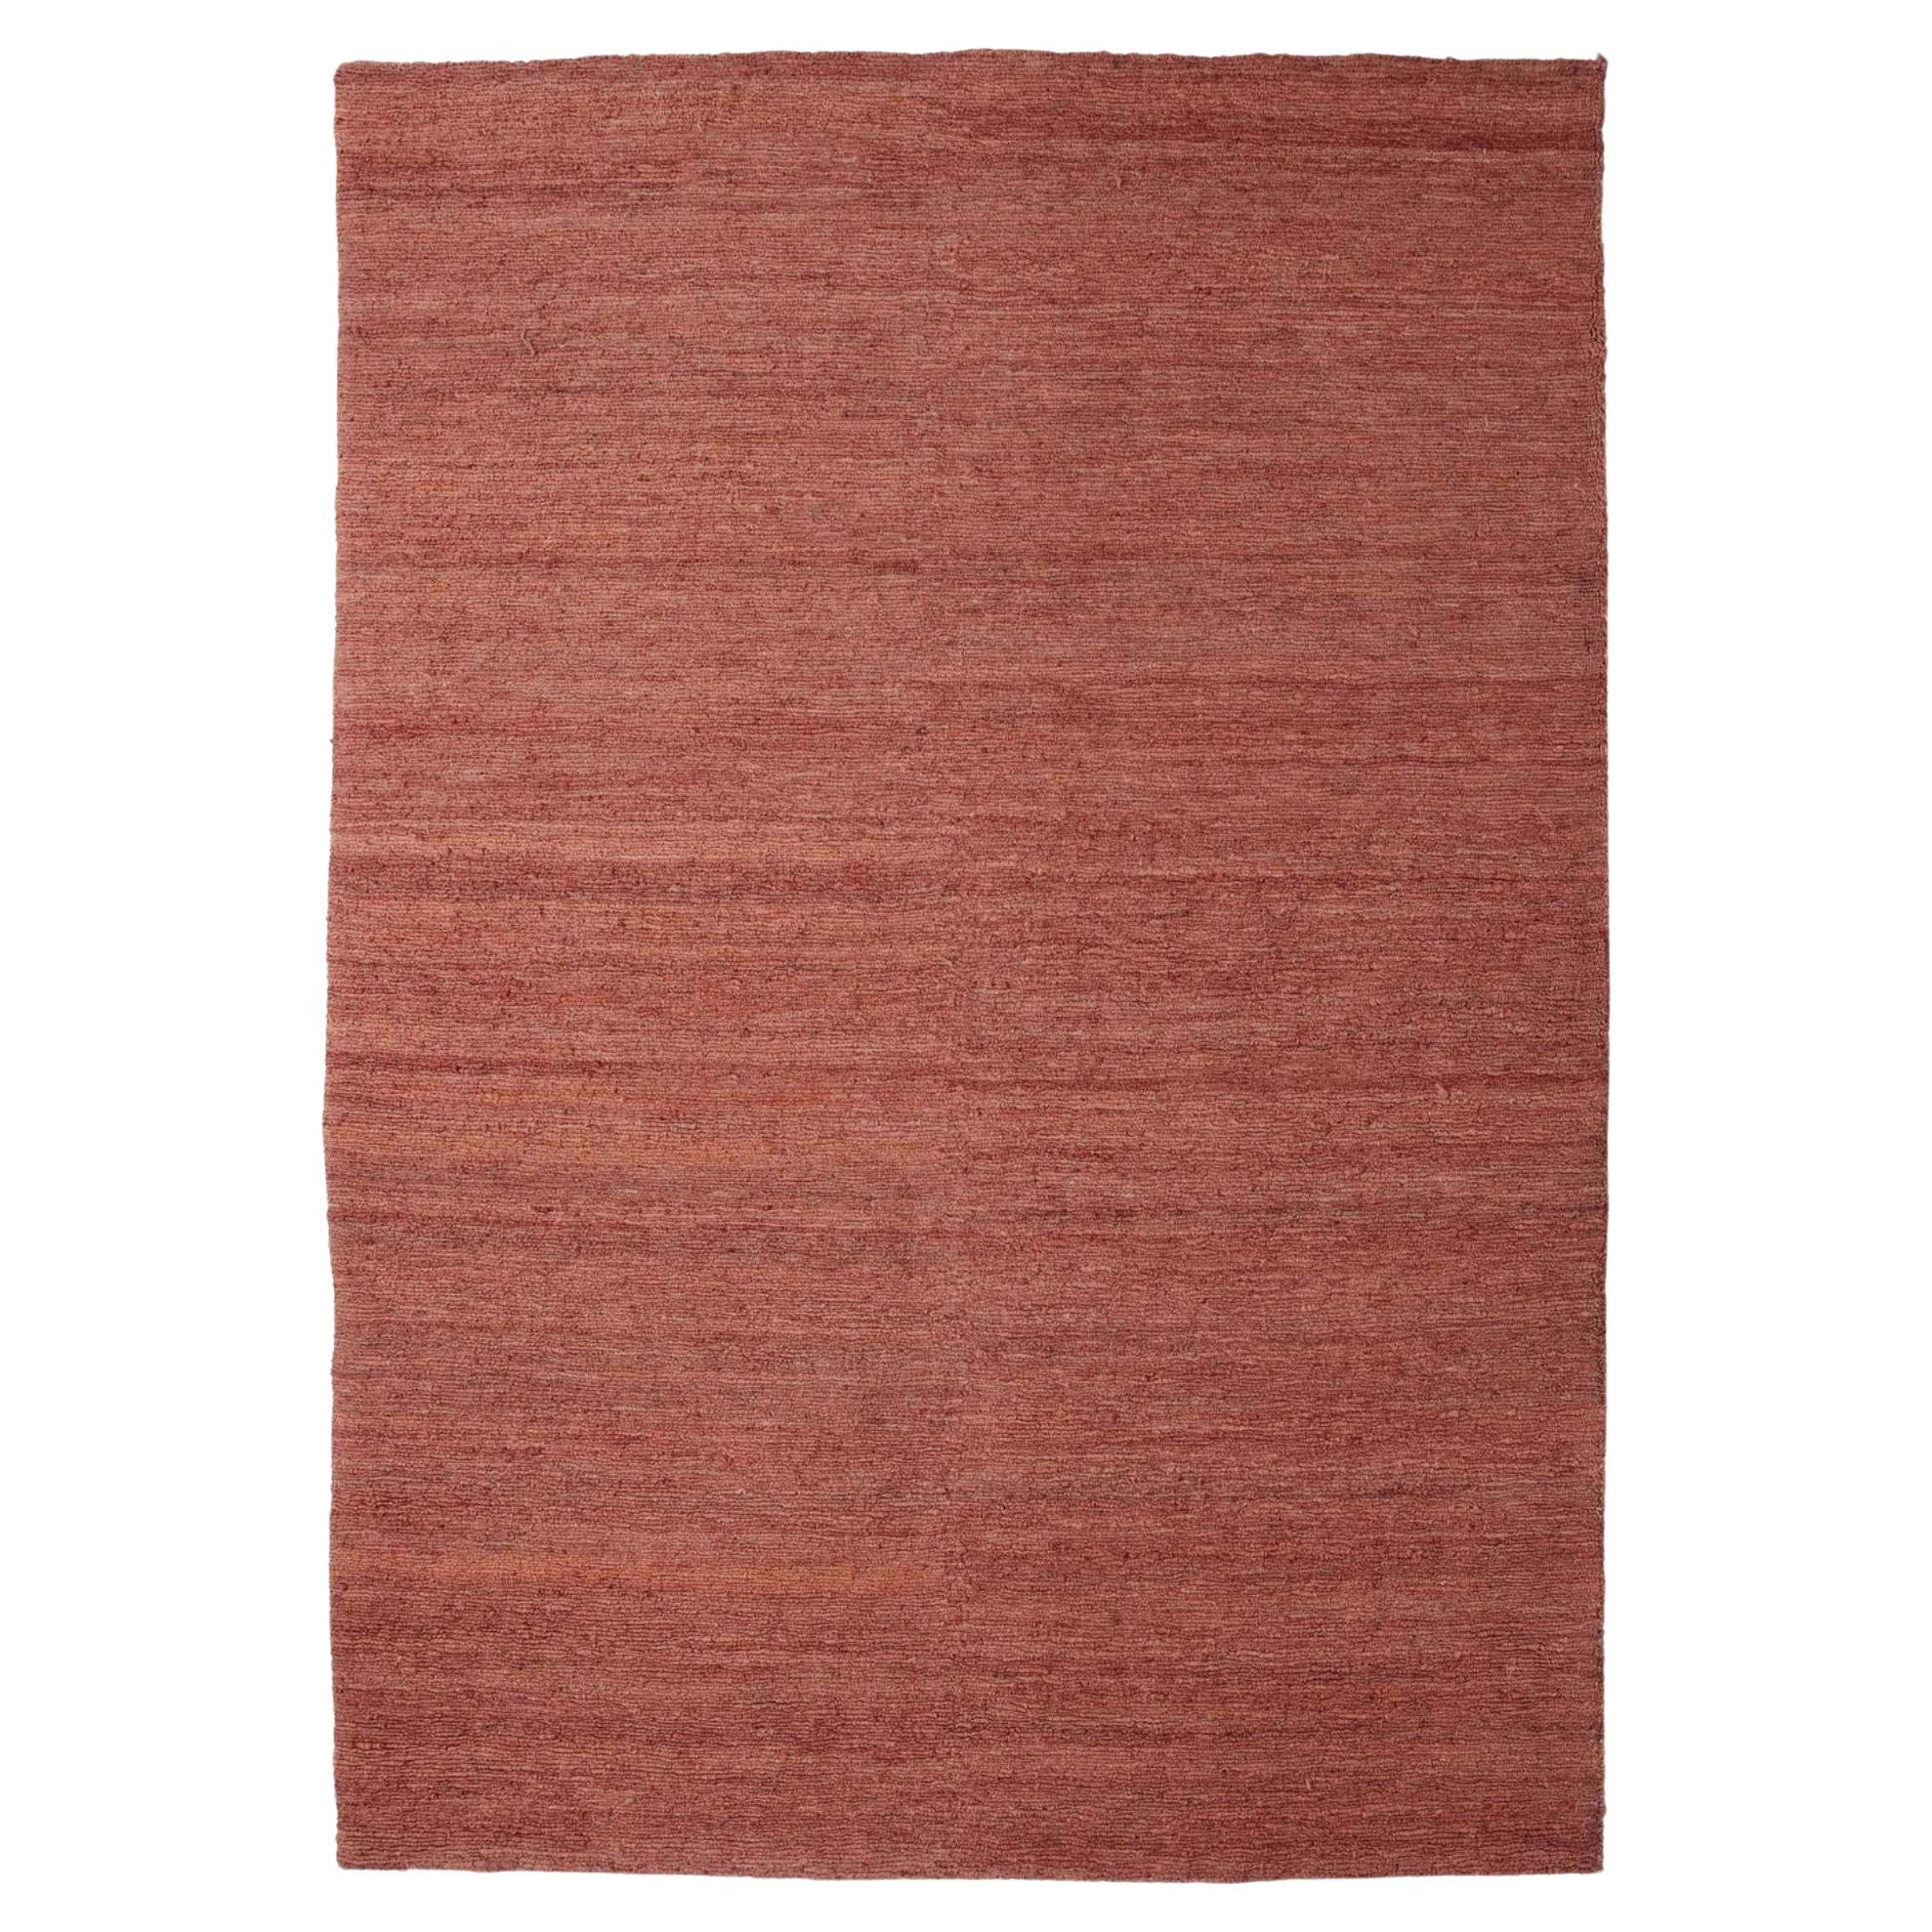 Nanimarquina „Earth“ Teppich aus handgesponnener Jute in „Terracotta“ 300x400cm